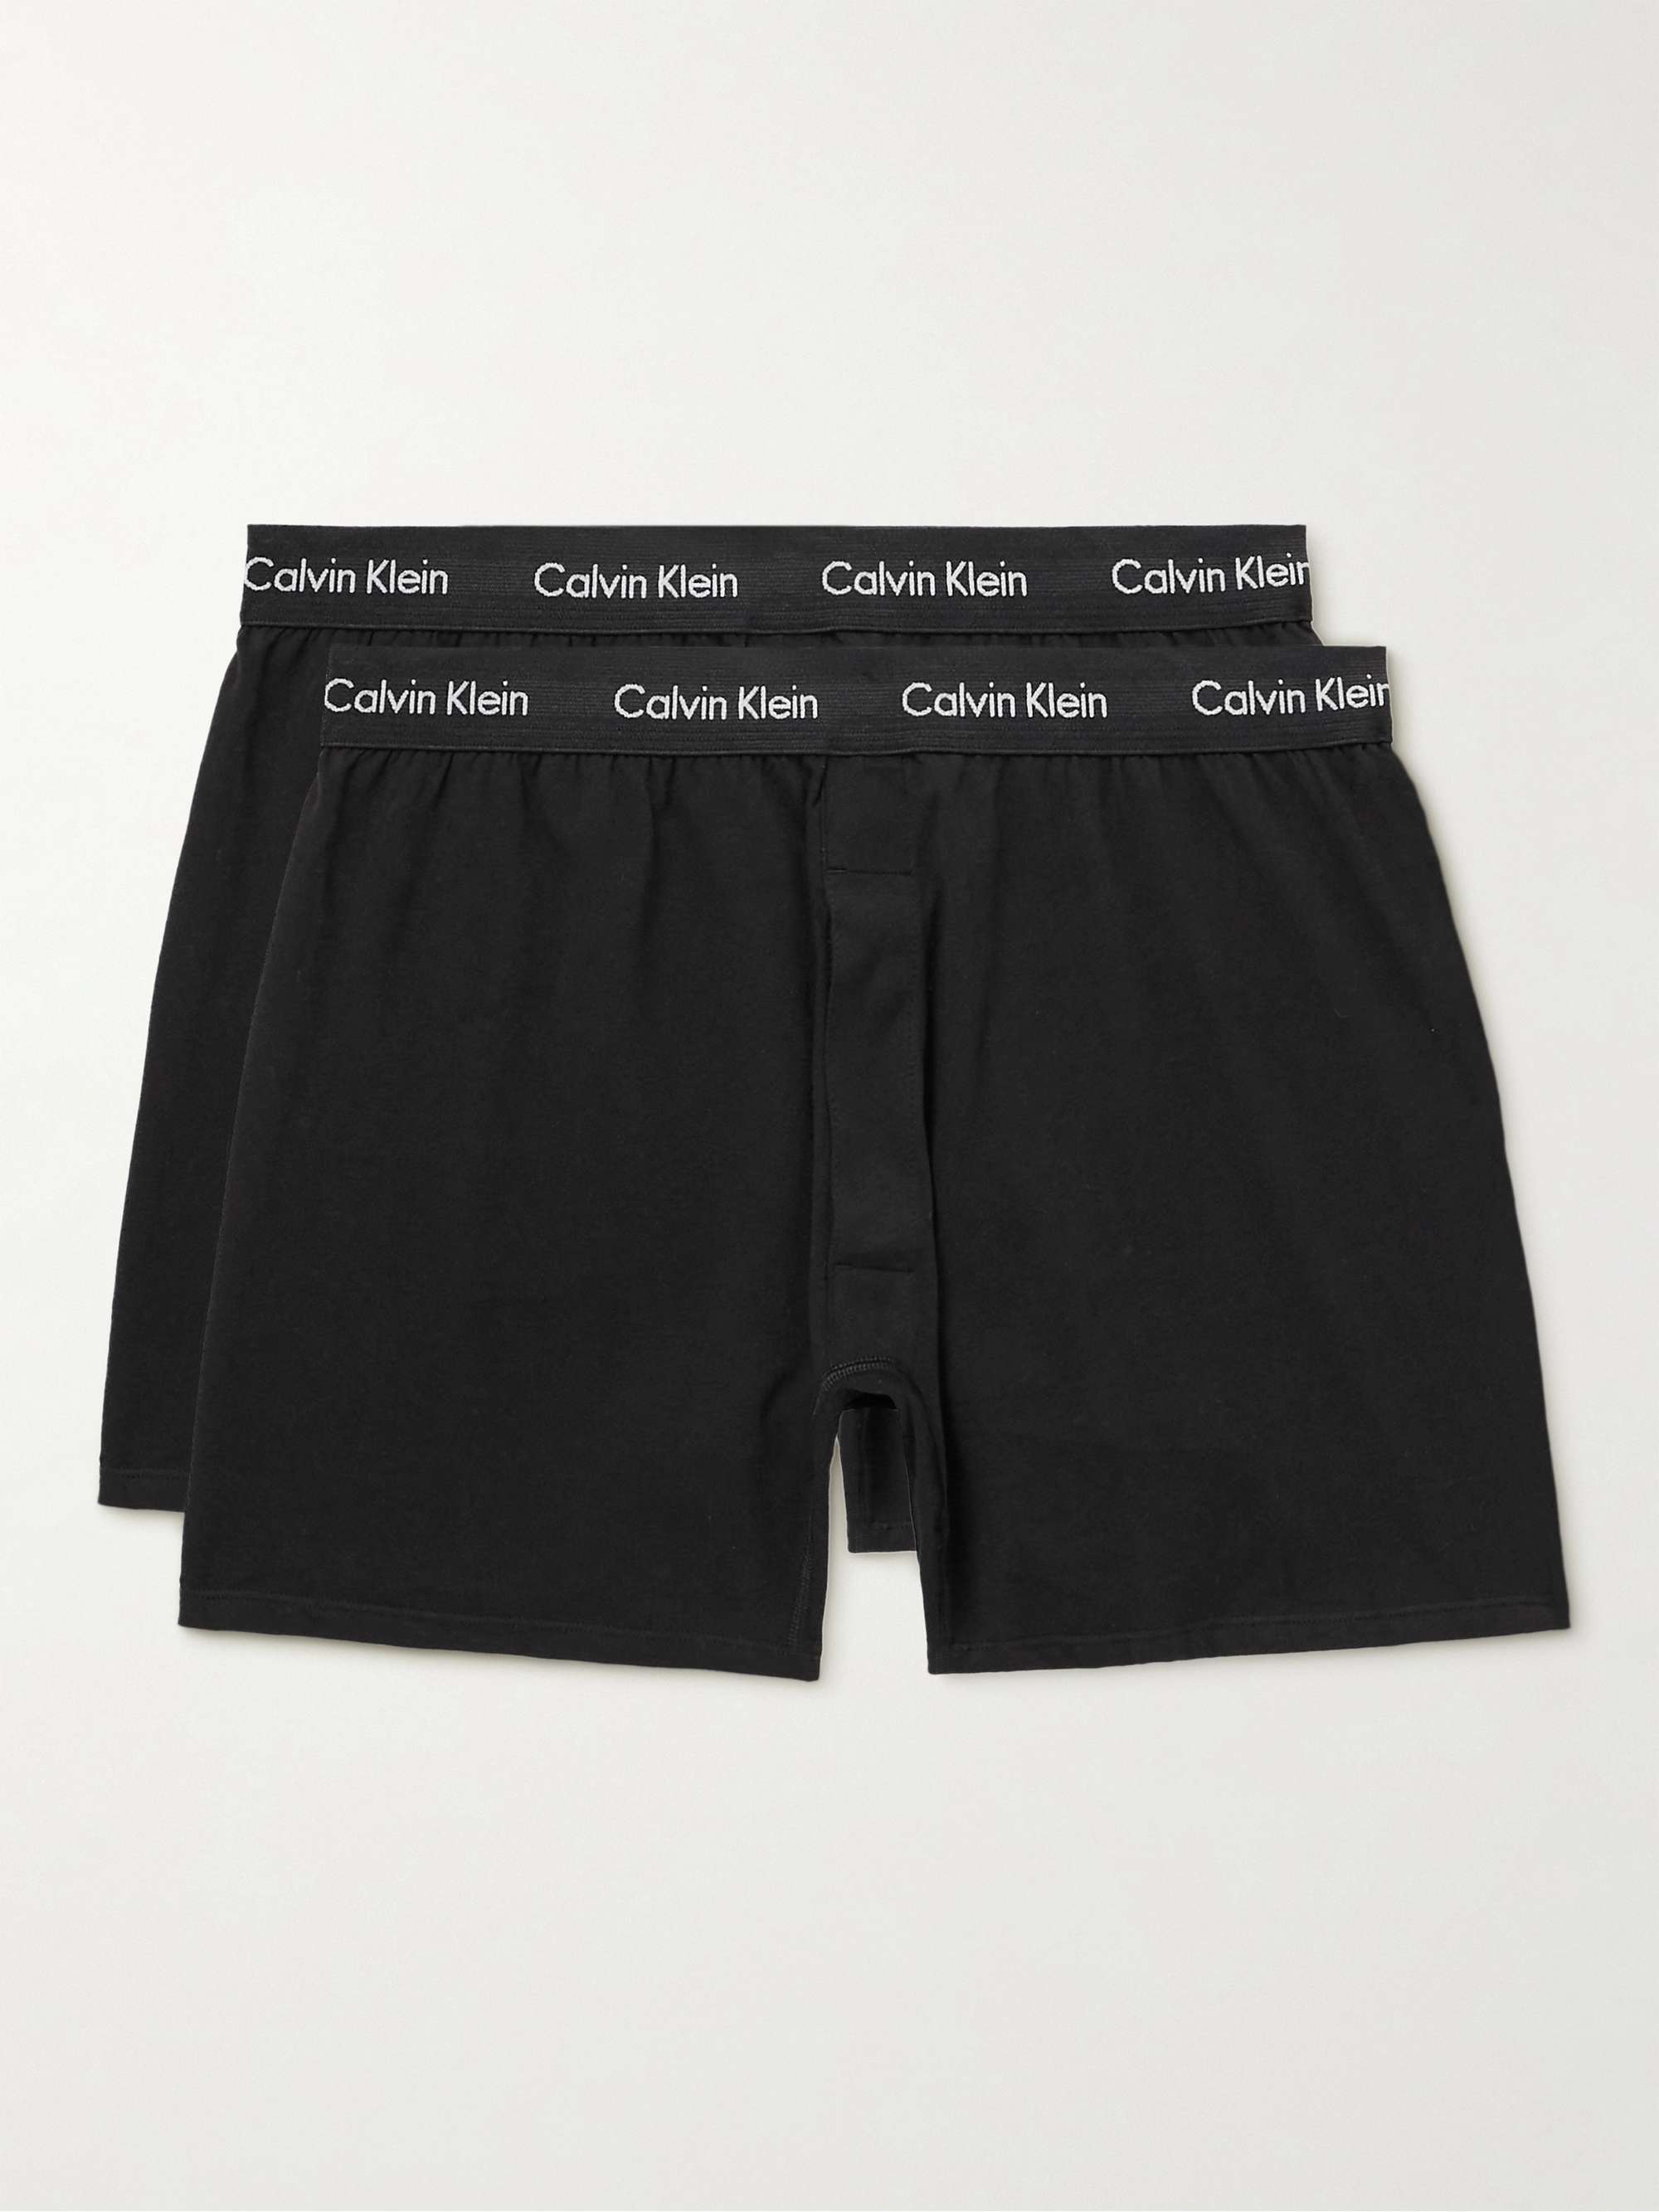 CALVIN KLEIN UNDERWEAR Two-Pack PORTER | for MR Men Stretch-Cotton Shorts Boxer